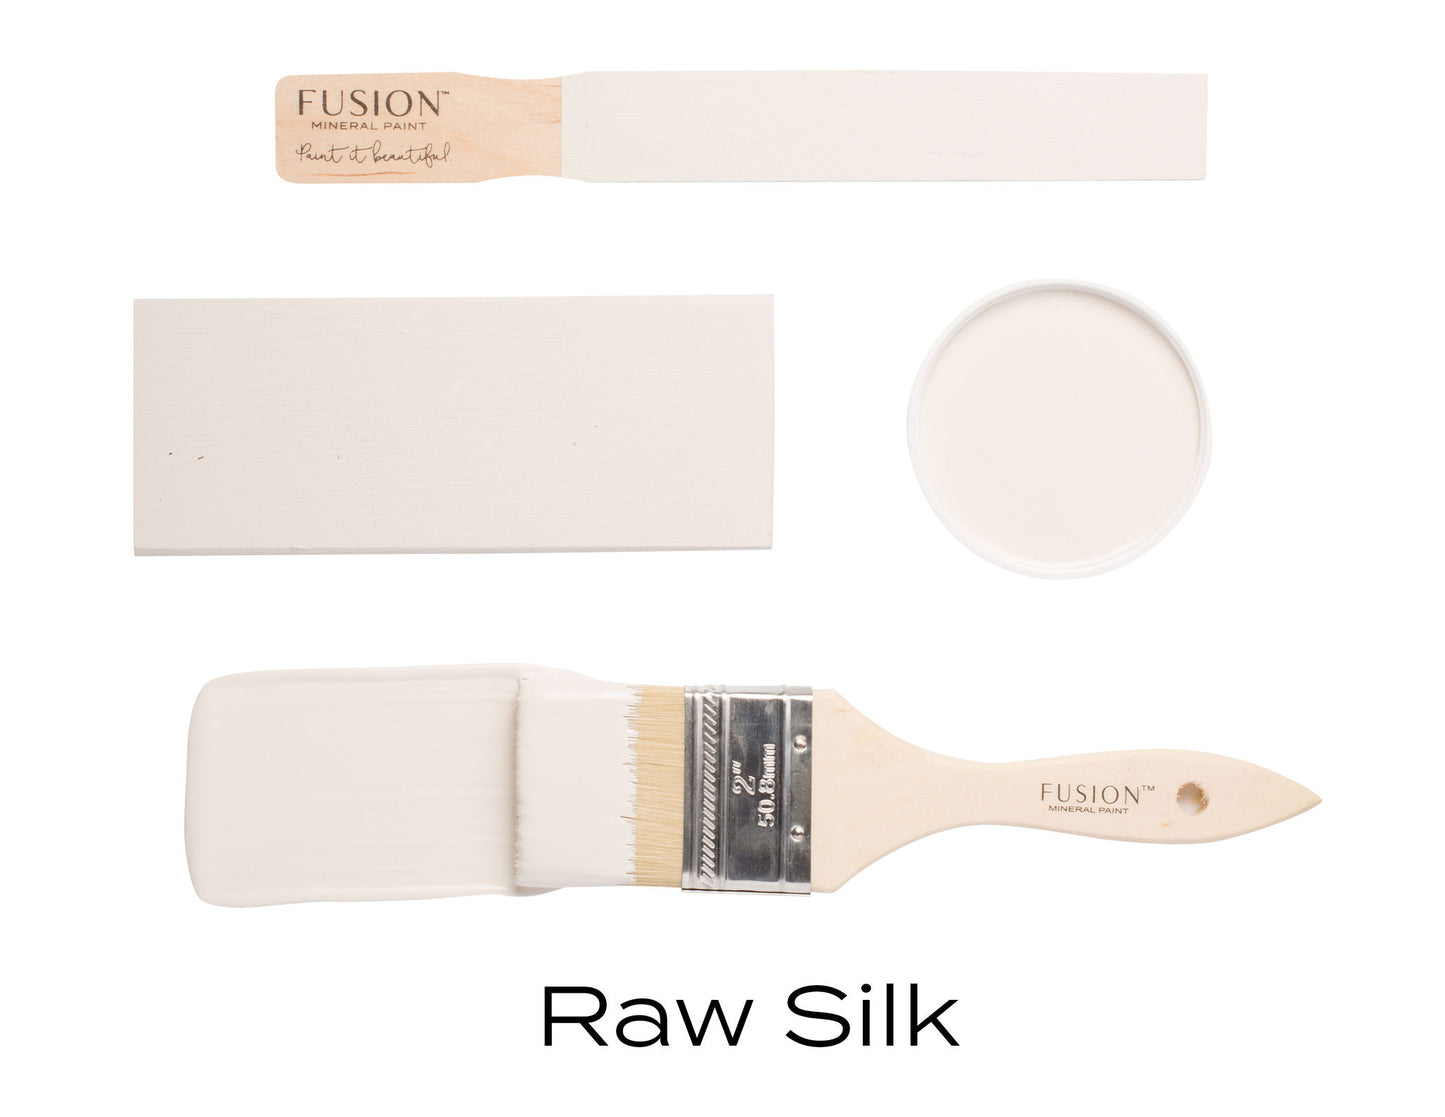 Raw Silk - Fusion Mineral Paint